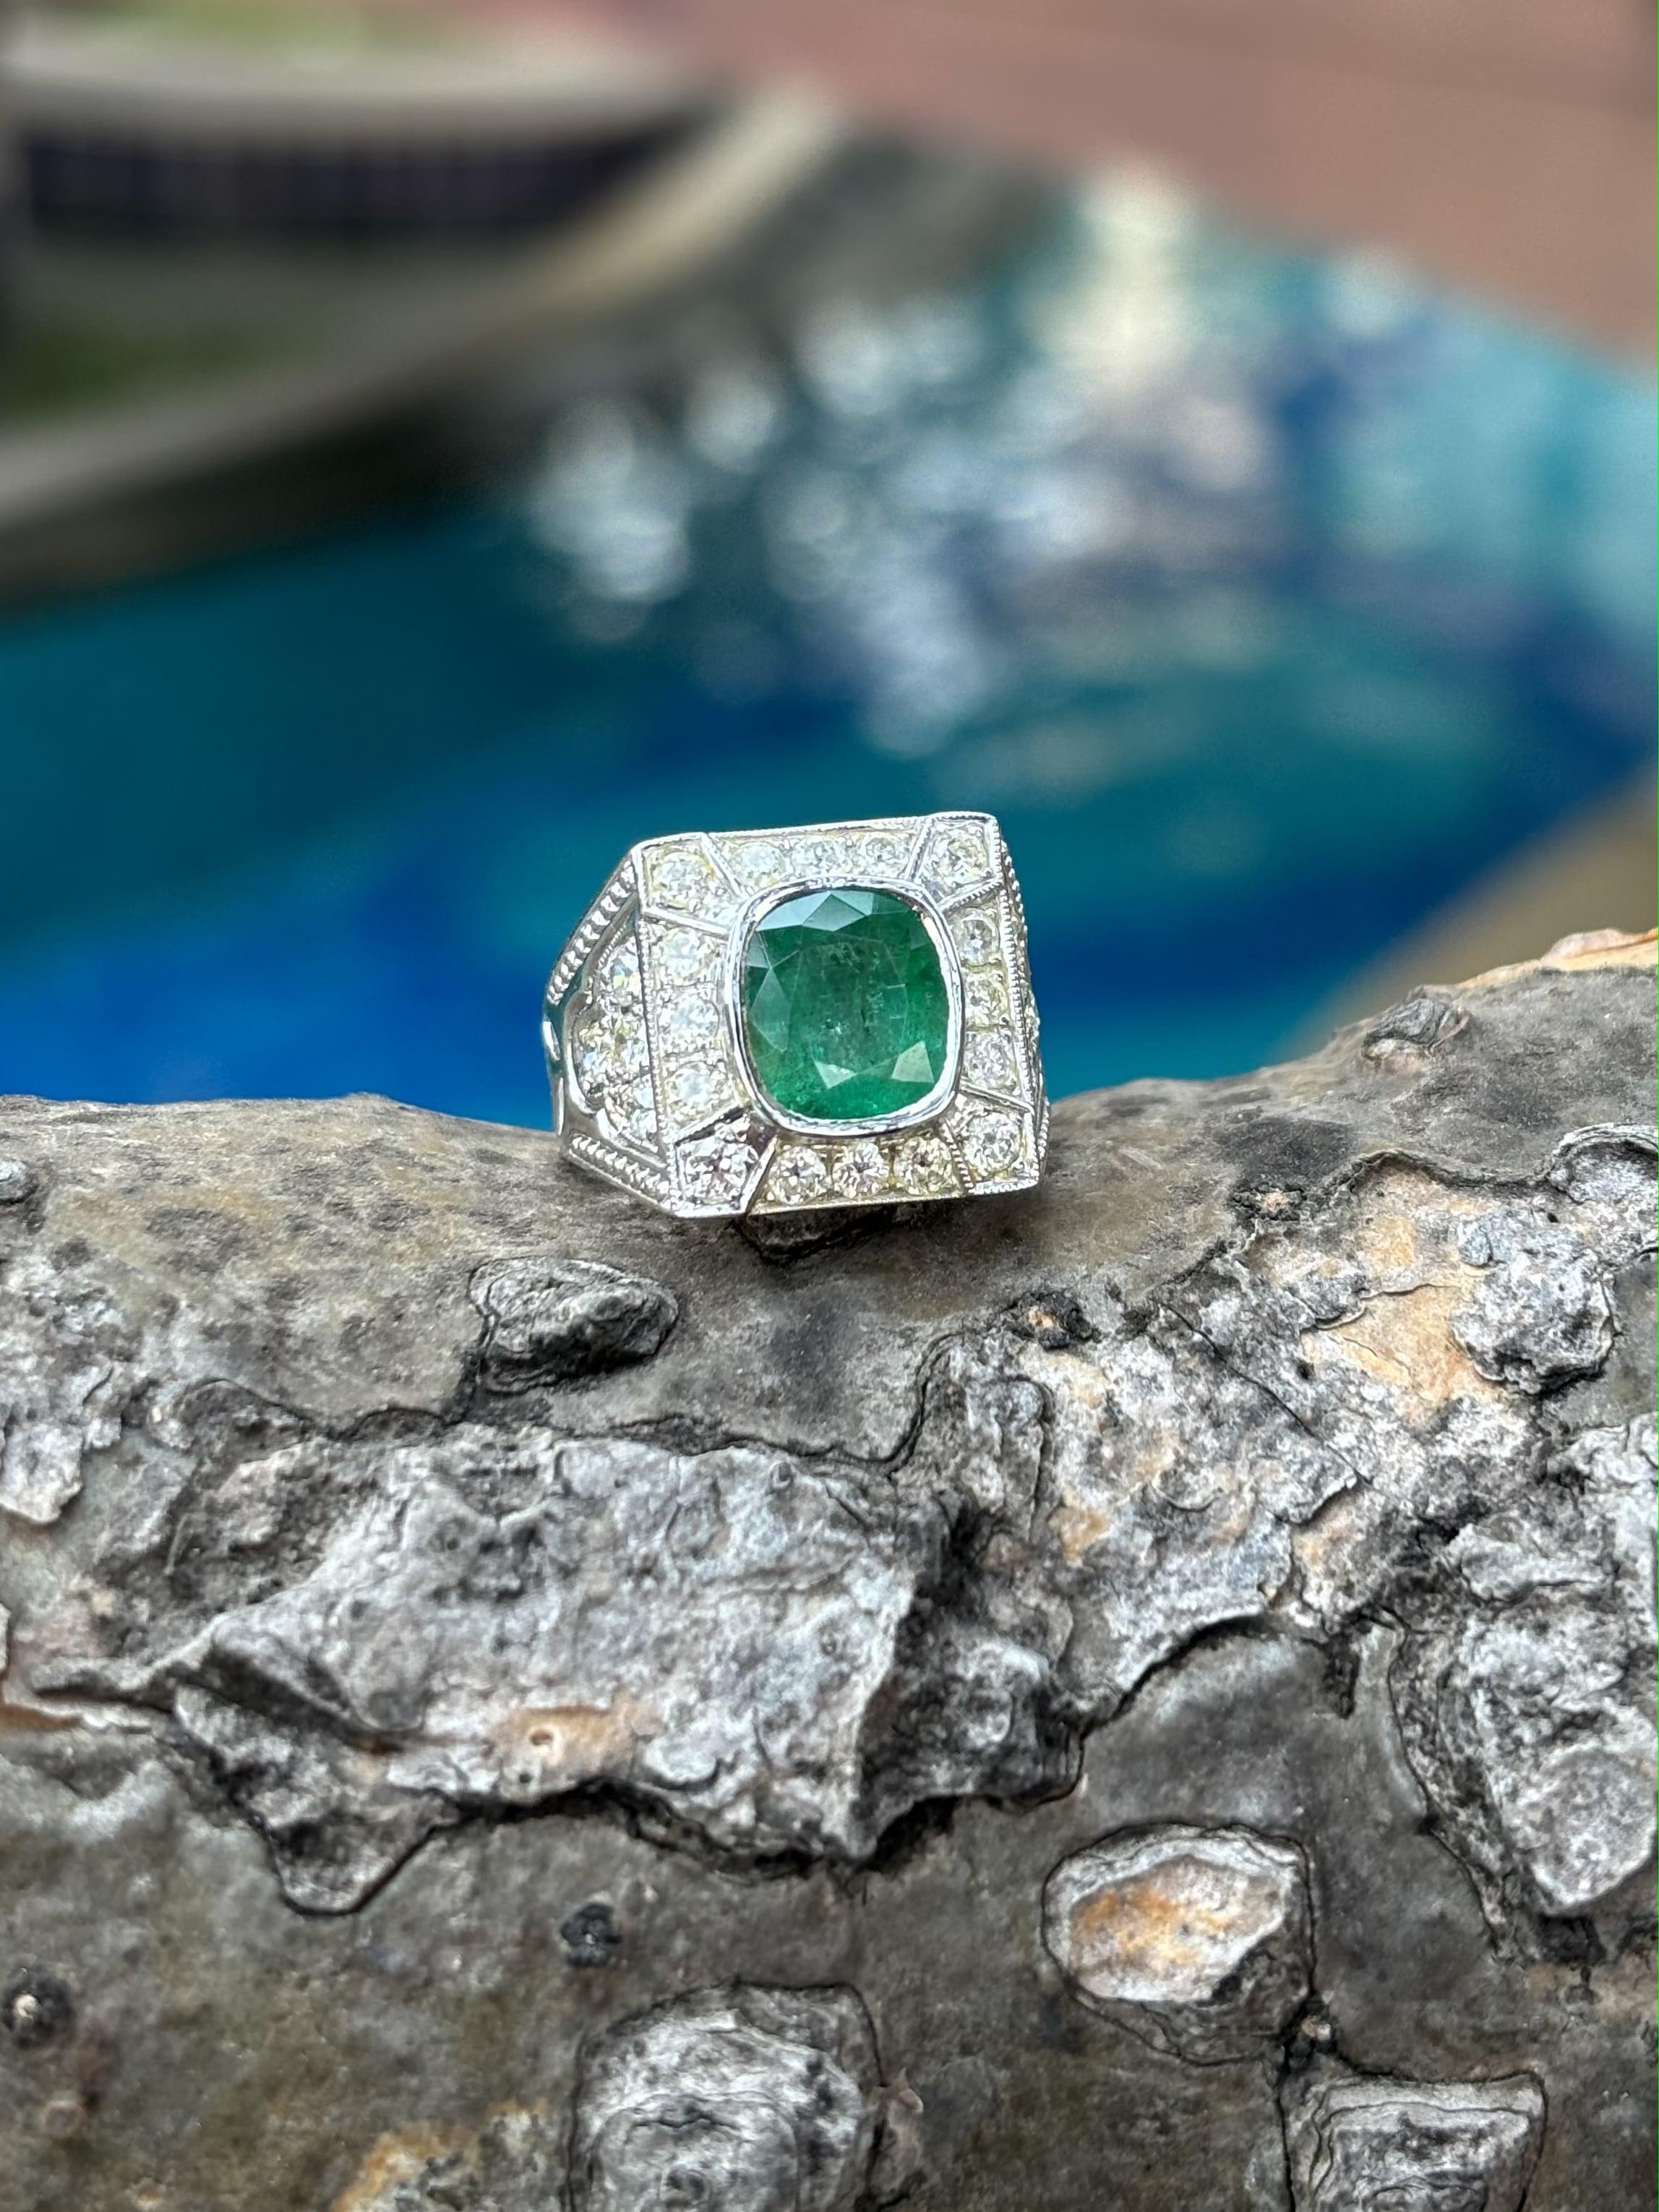 Emerald Cut 2.66 ct Zambian Emerald Art Deco Ring with Old Cut Diamonds in 18K Gold